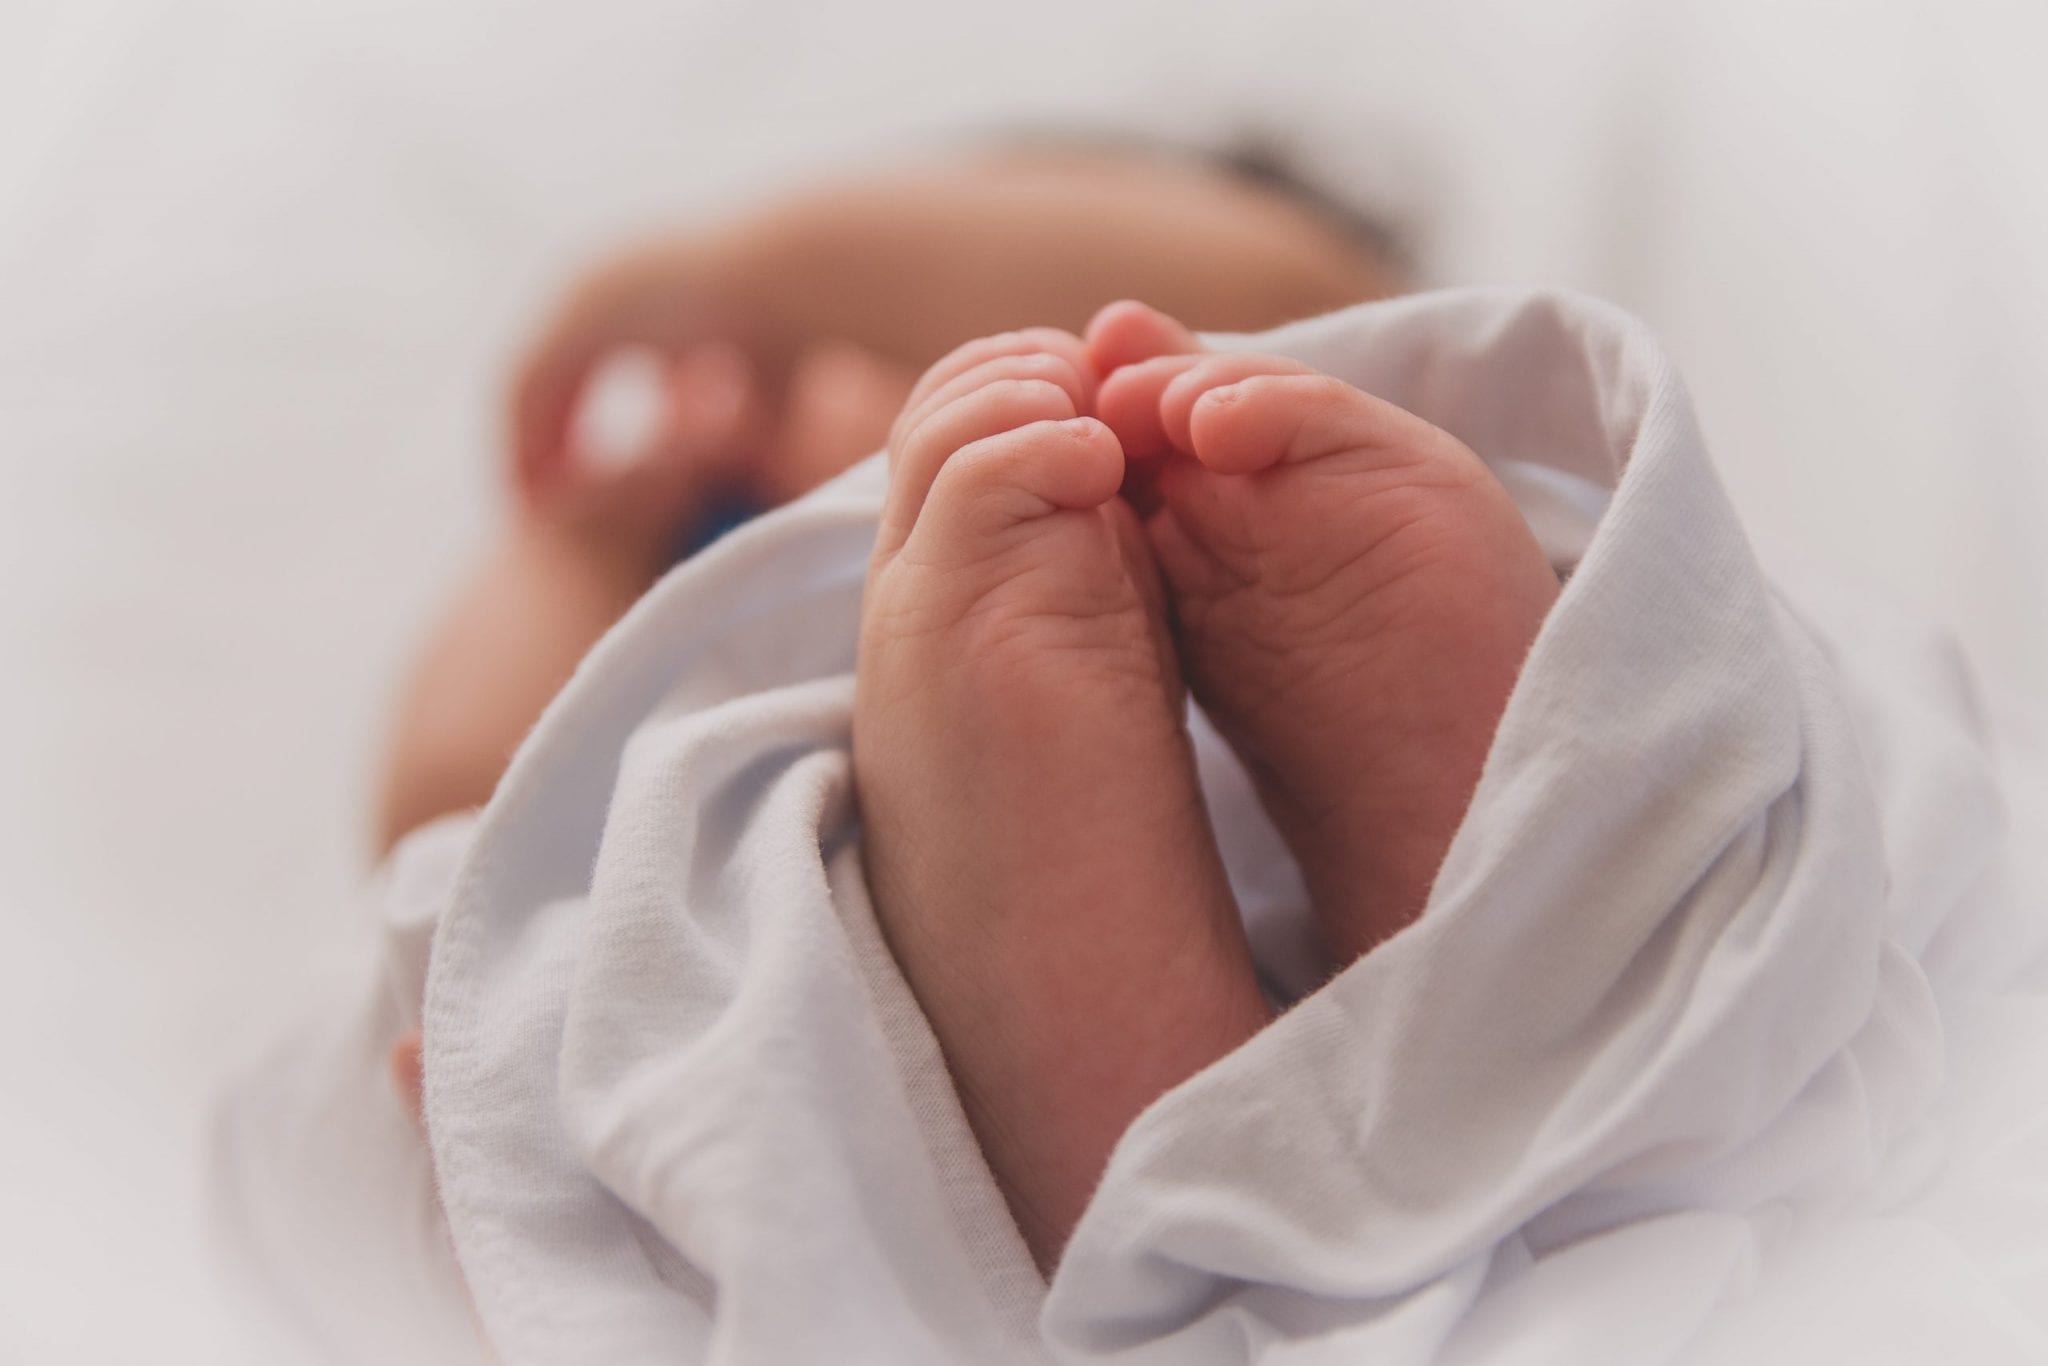 Newborns with congenital heart disease often develop brain disorders later in life